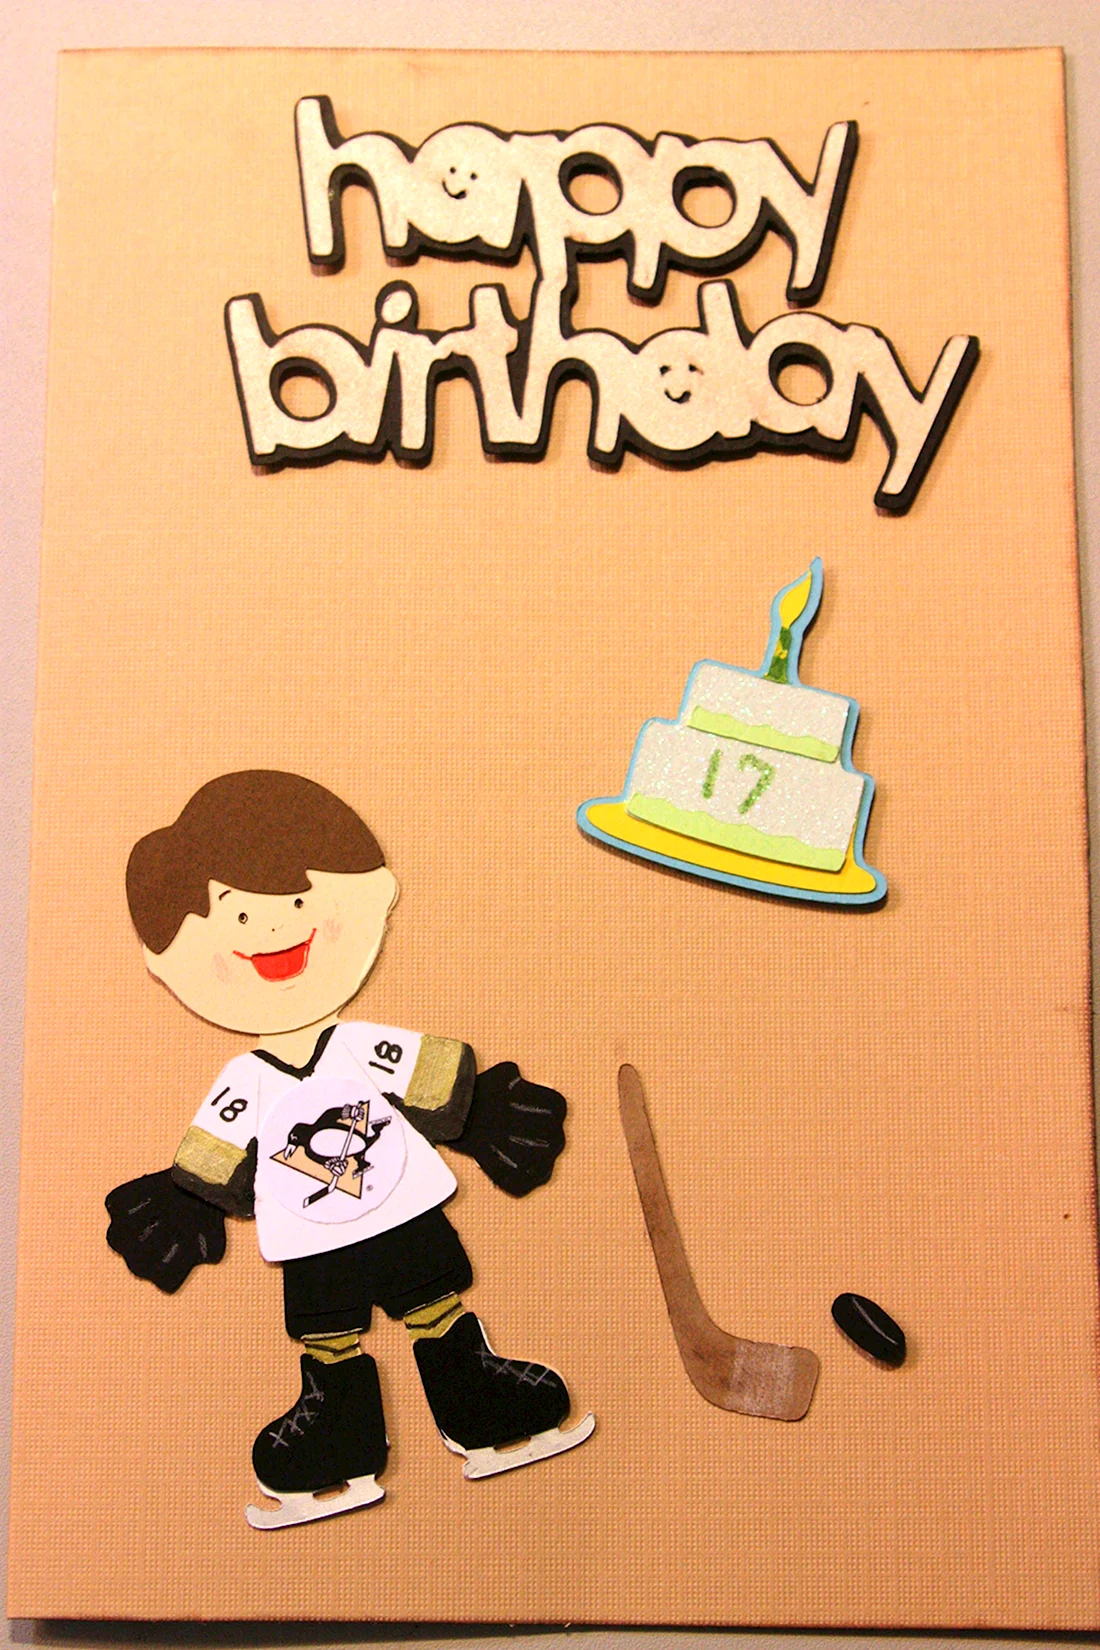 Happy Birthday хоккей